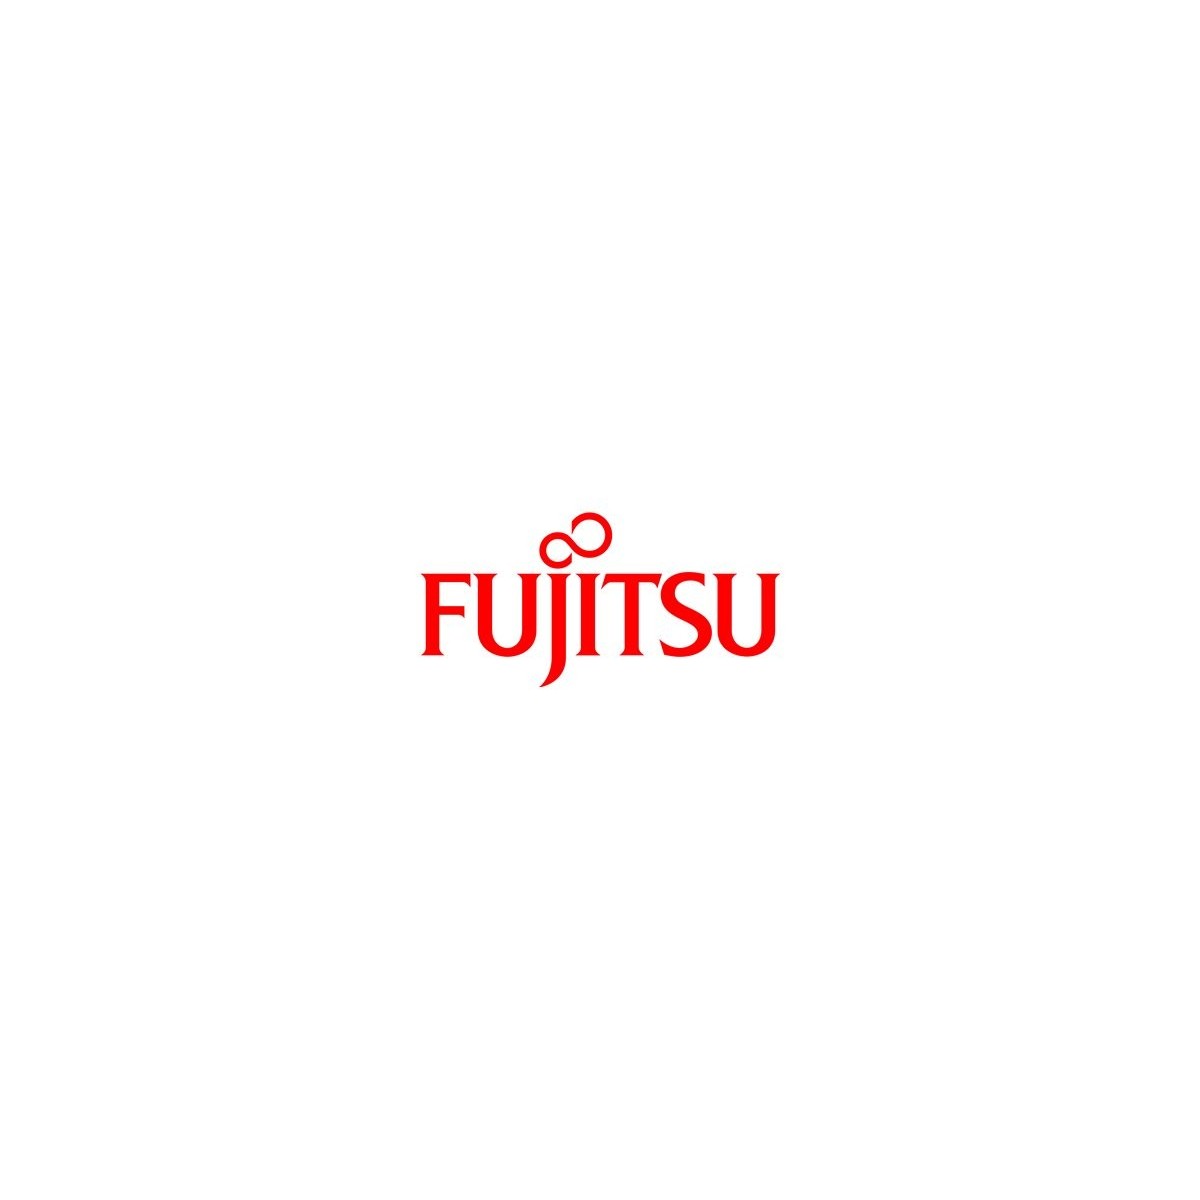 Fujitsu VMware vCenter Server 7 Foundation for vSphere 7 up to 4 hosts - Mandatory 5